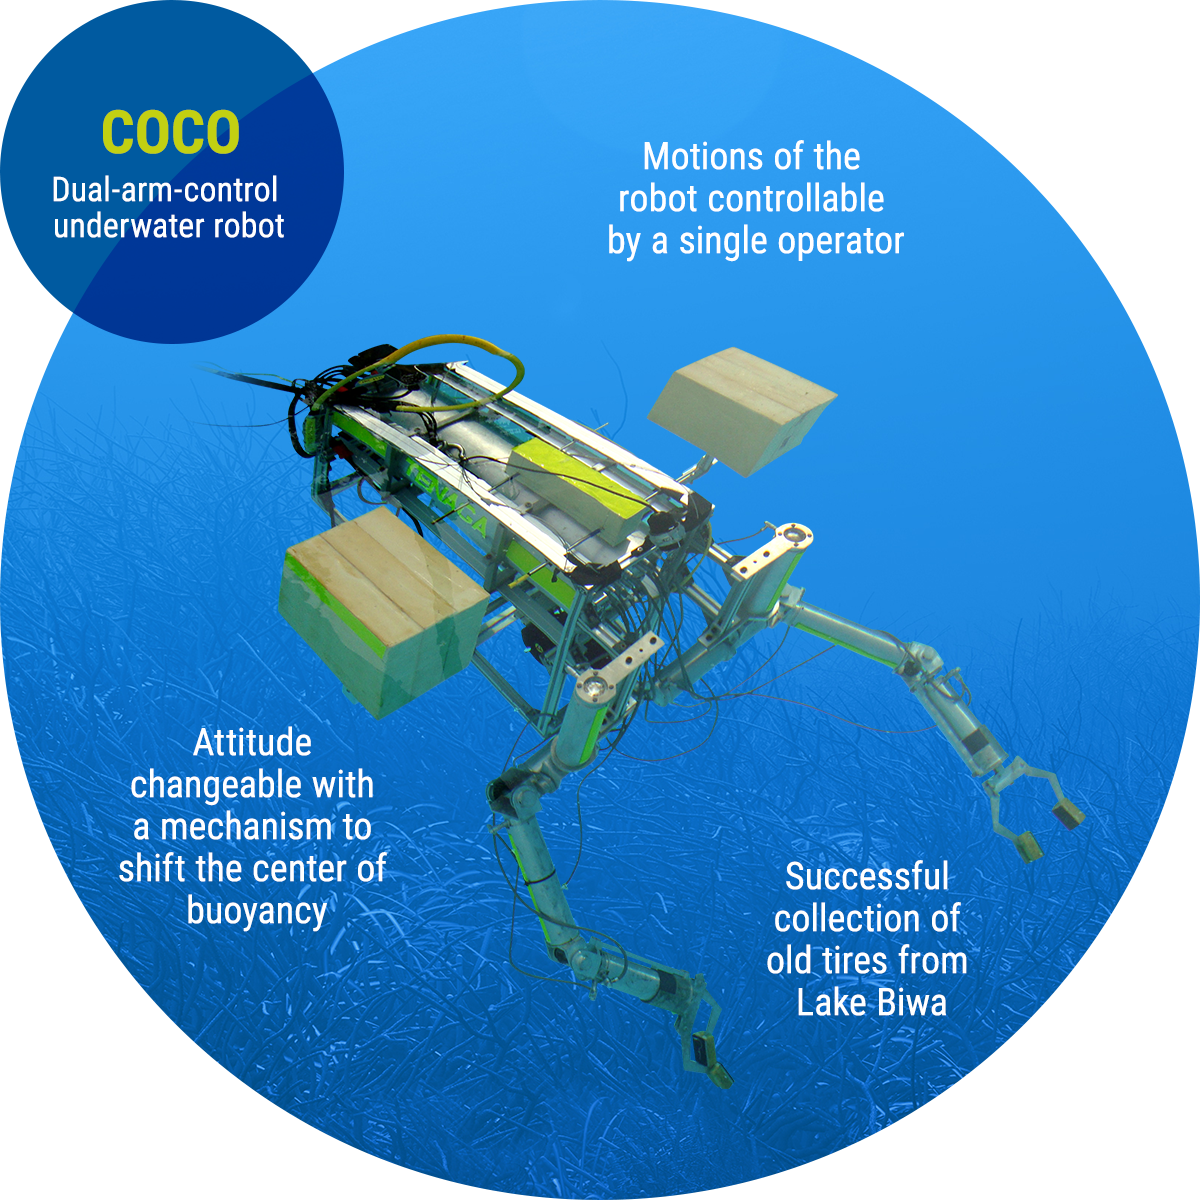 COCO: Dual-arm-control underwater robot